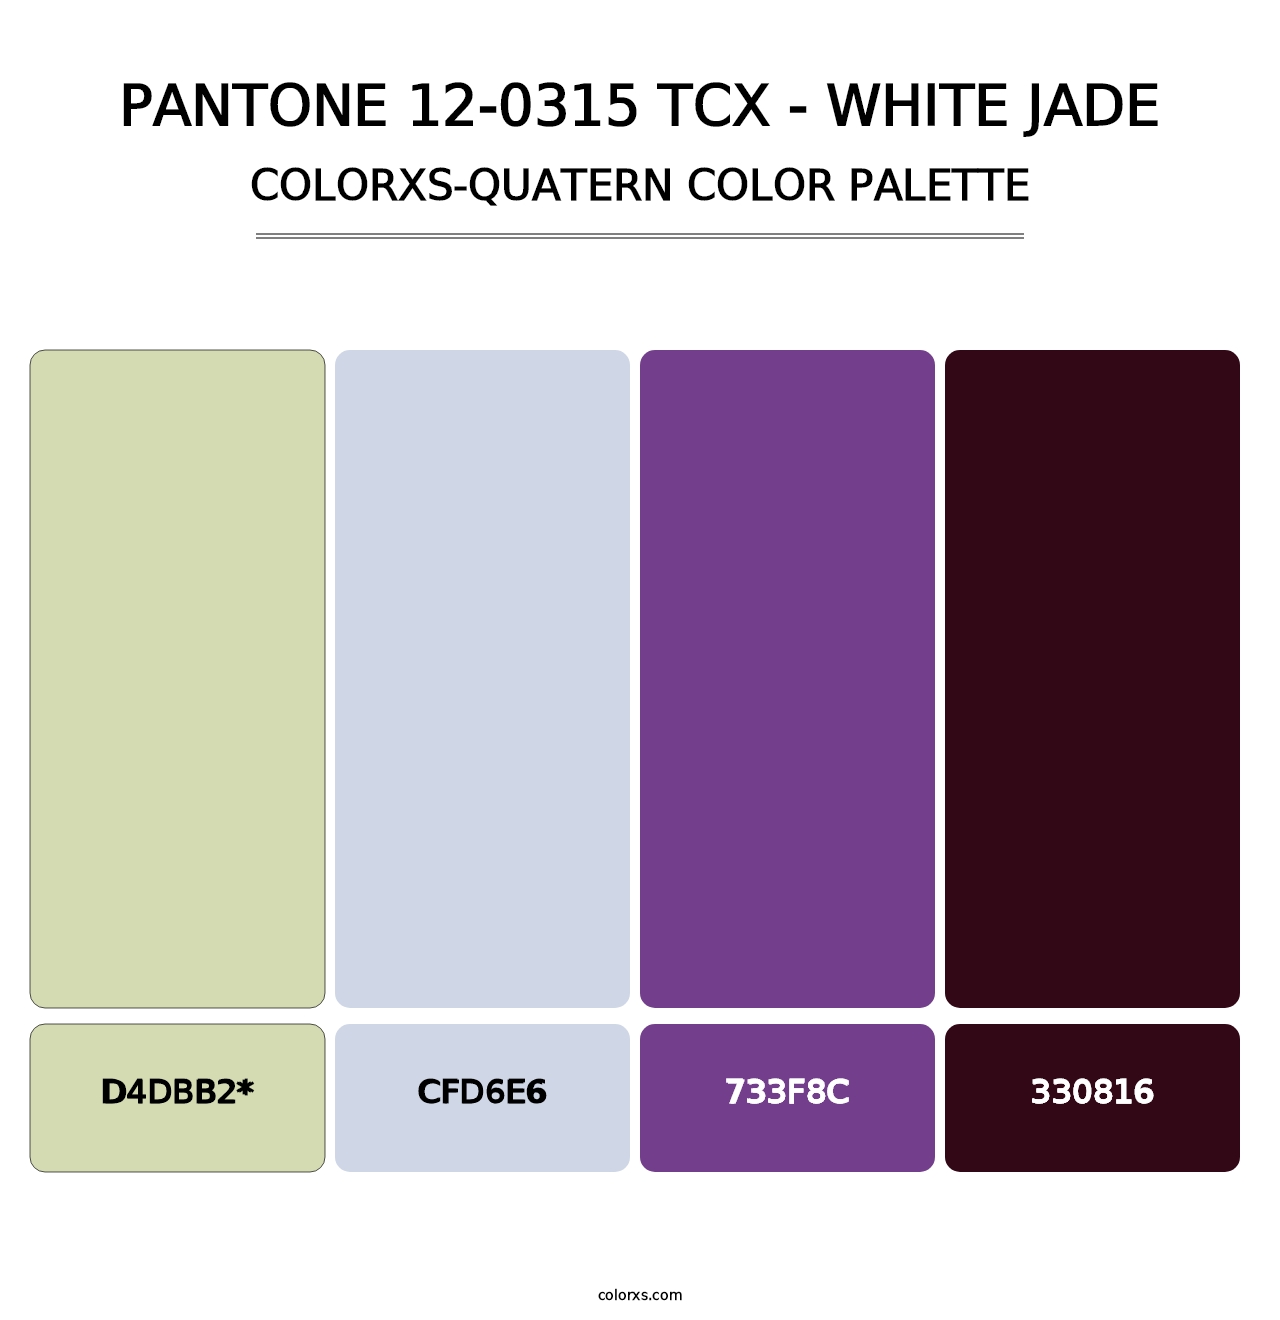 PANTONE 12-0315 TCX - White Jade - Colorxs Quatern Palette